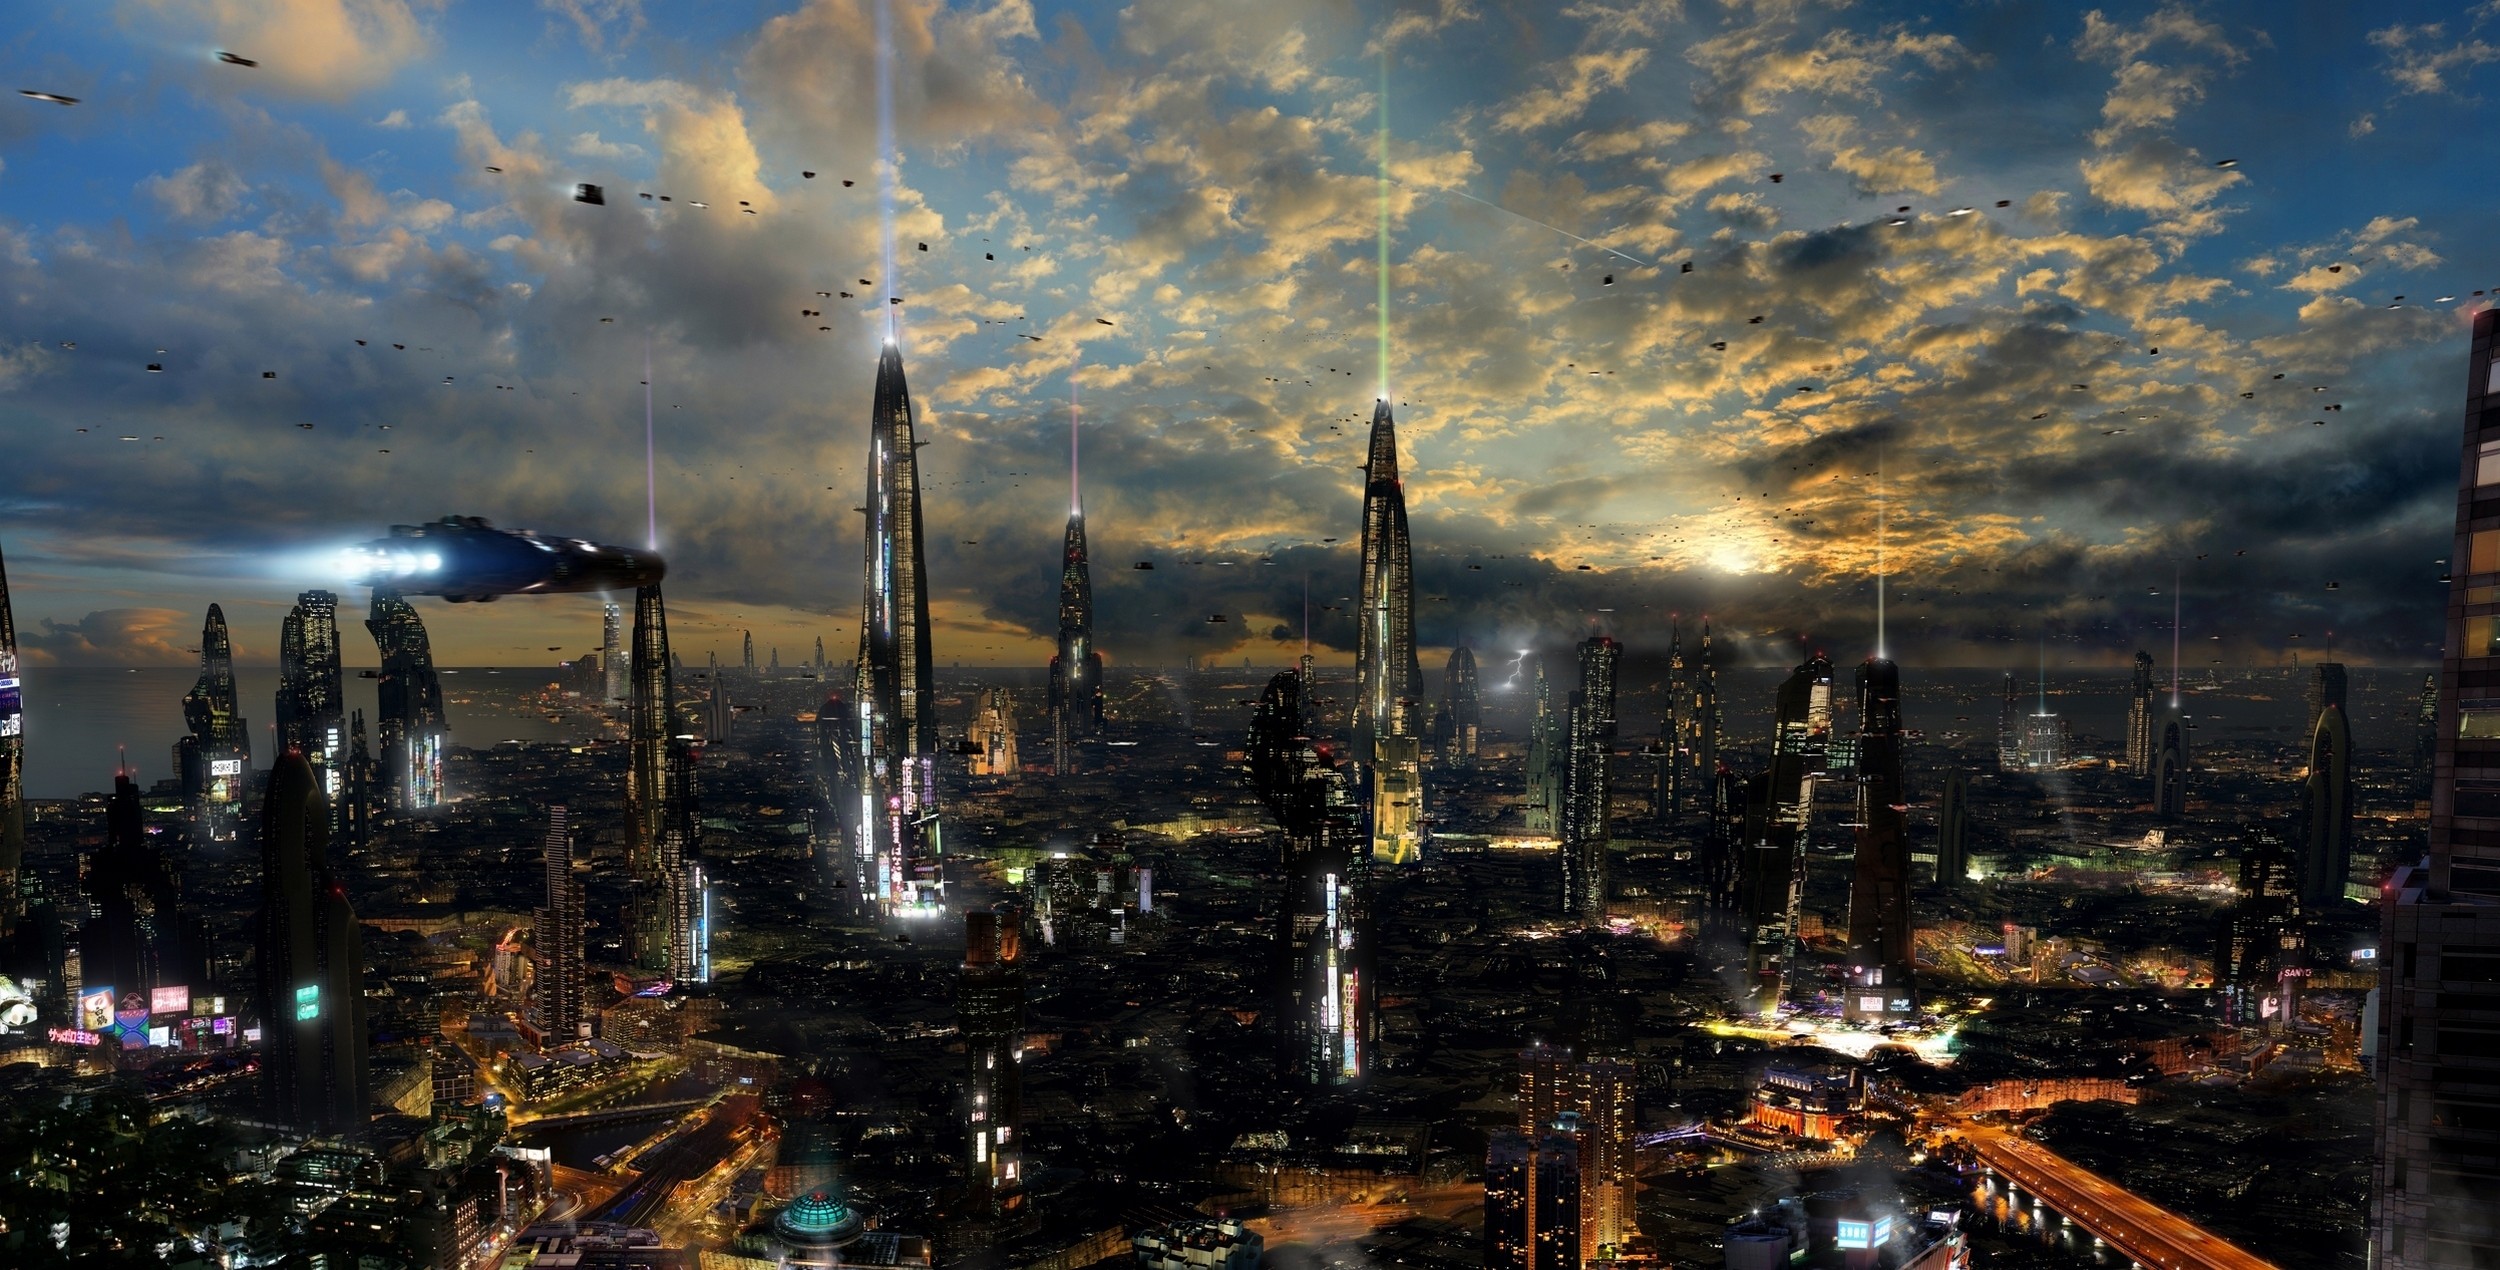 2500x1270 future-city-amazing-hd-desktop-wallpaper-for-background-in-high-resolution.jpg  (2500Ã1270) | Virtual Machine | Pinterest | Future city, Sci fi and Sci fi  ...